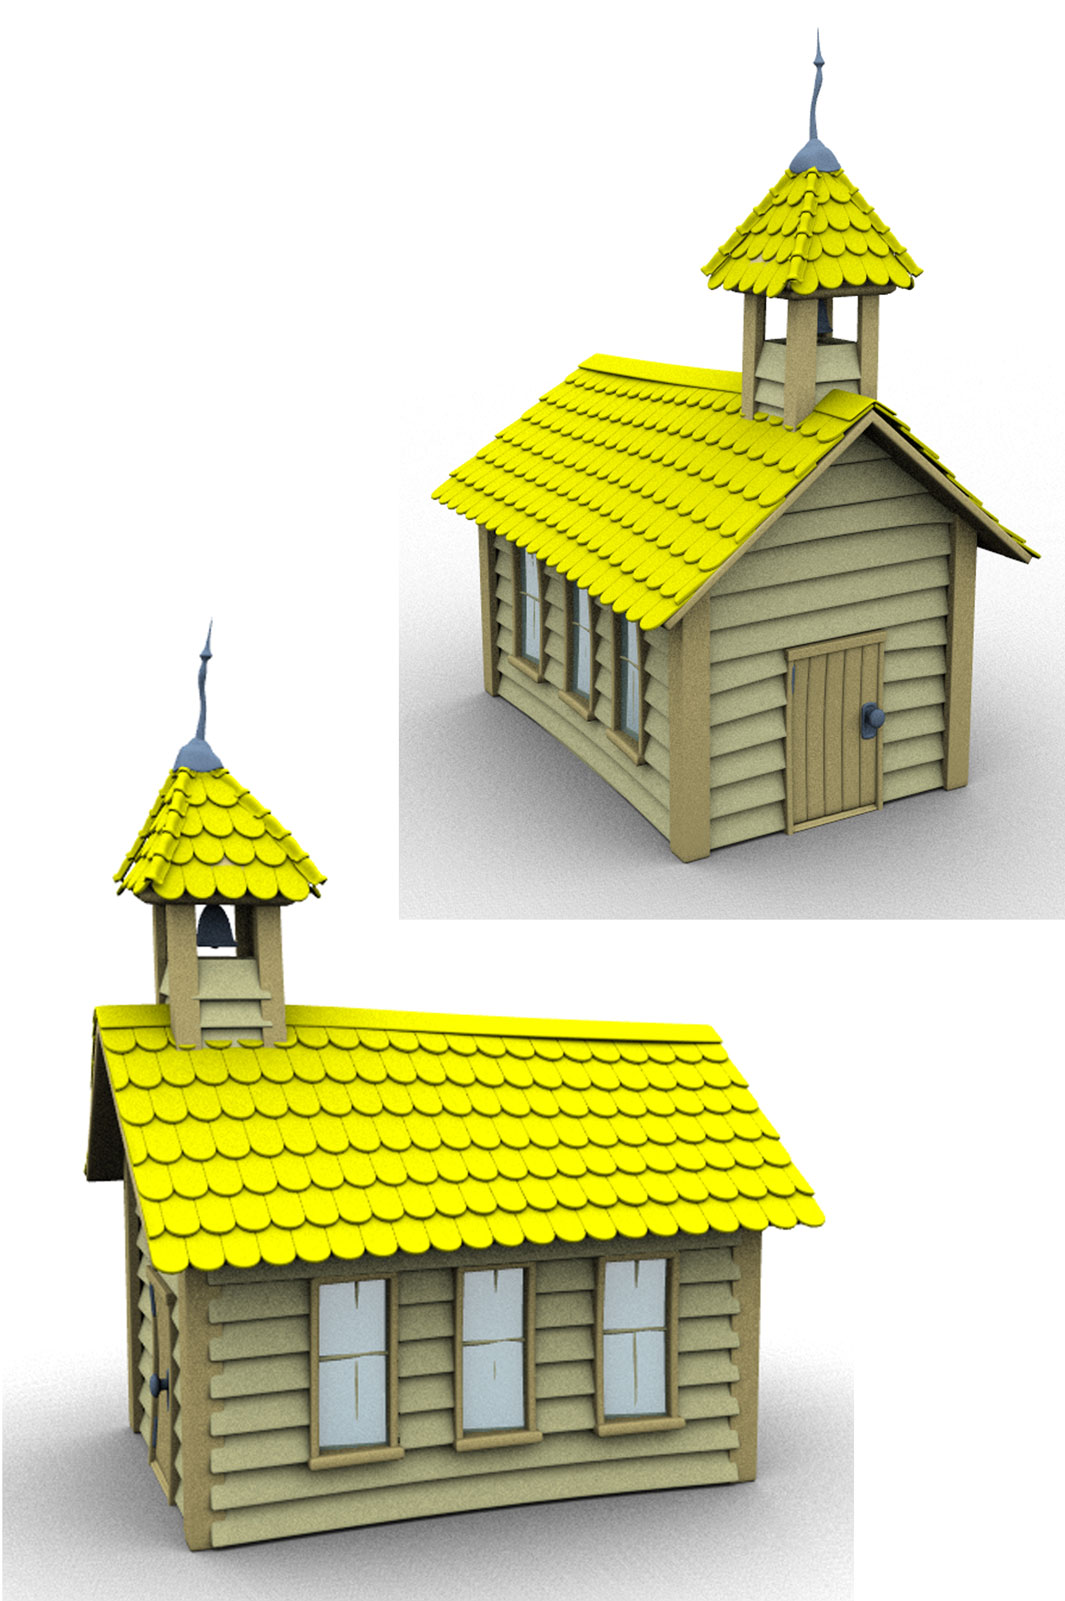 3D rendering of School house